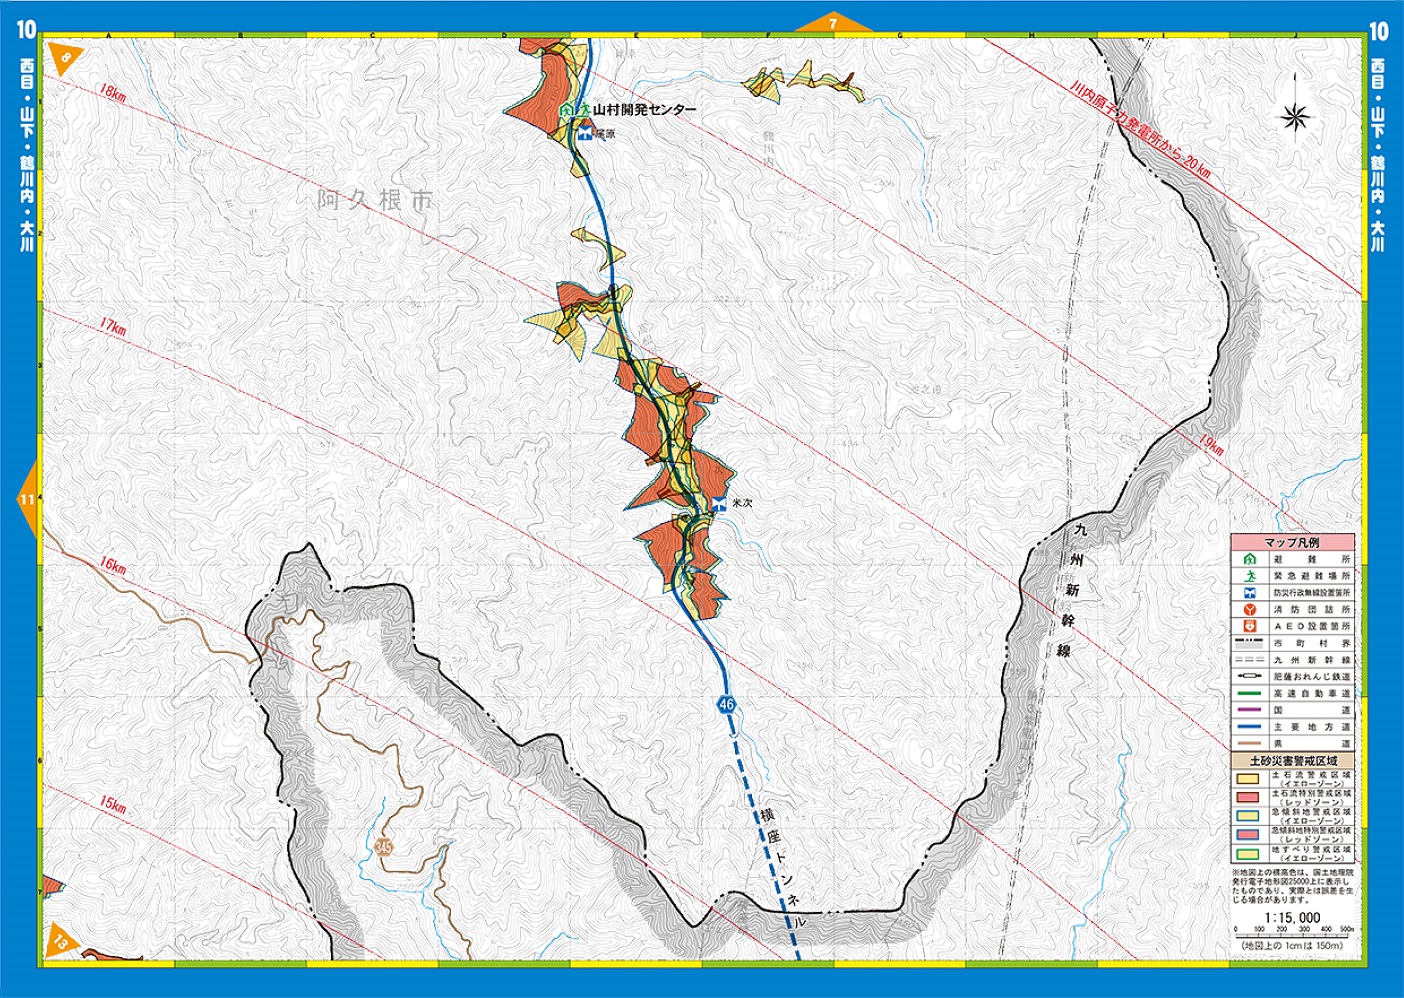 阿久根市防災マップ（10 西目・山下・鶴川内・大川）の画像